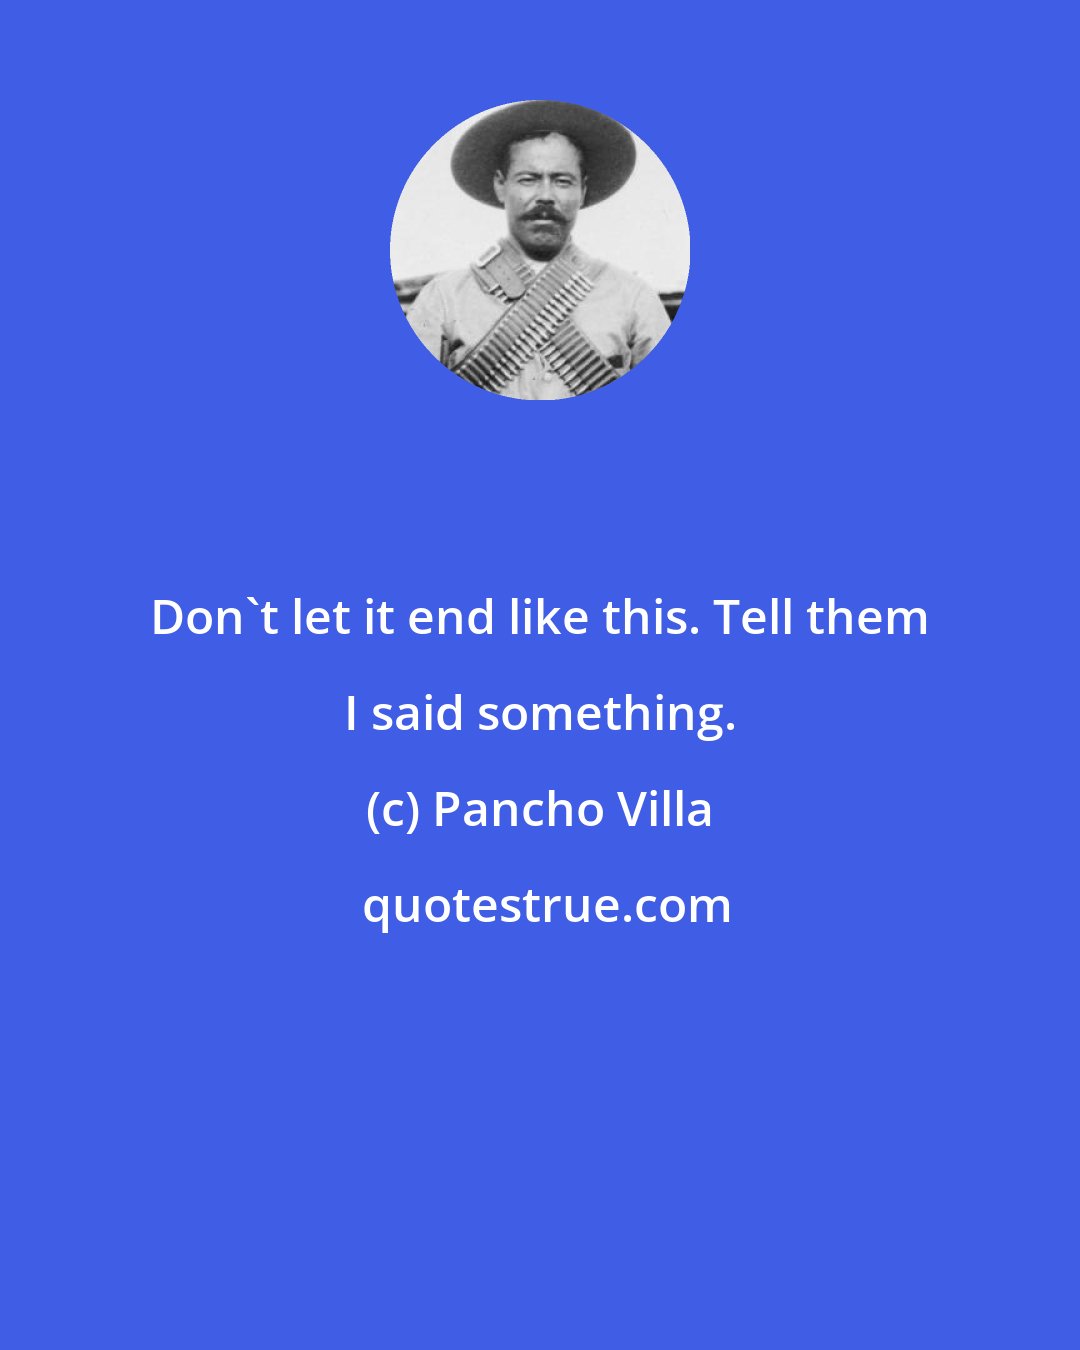 Pancho Villa: Don't let it end like this. Tell them I said something.